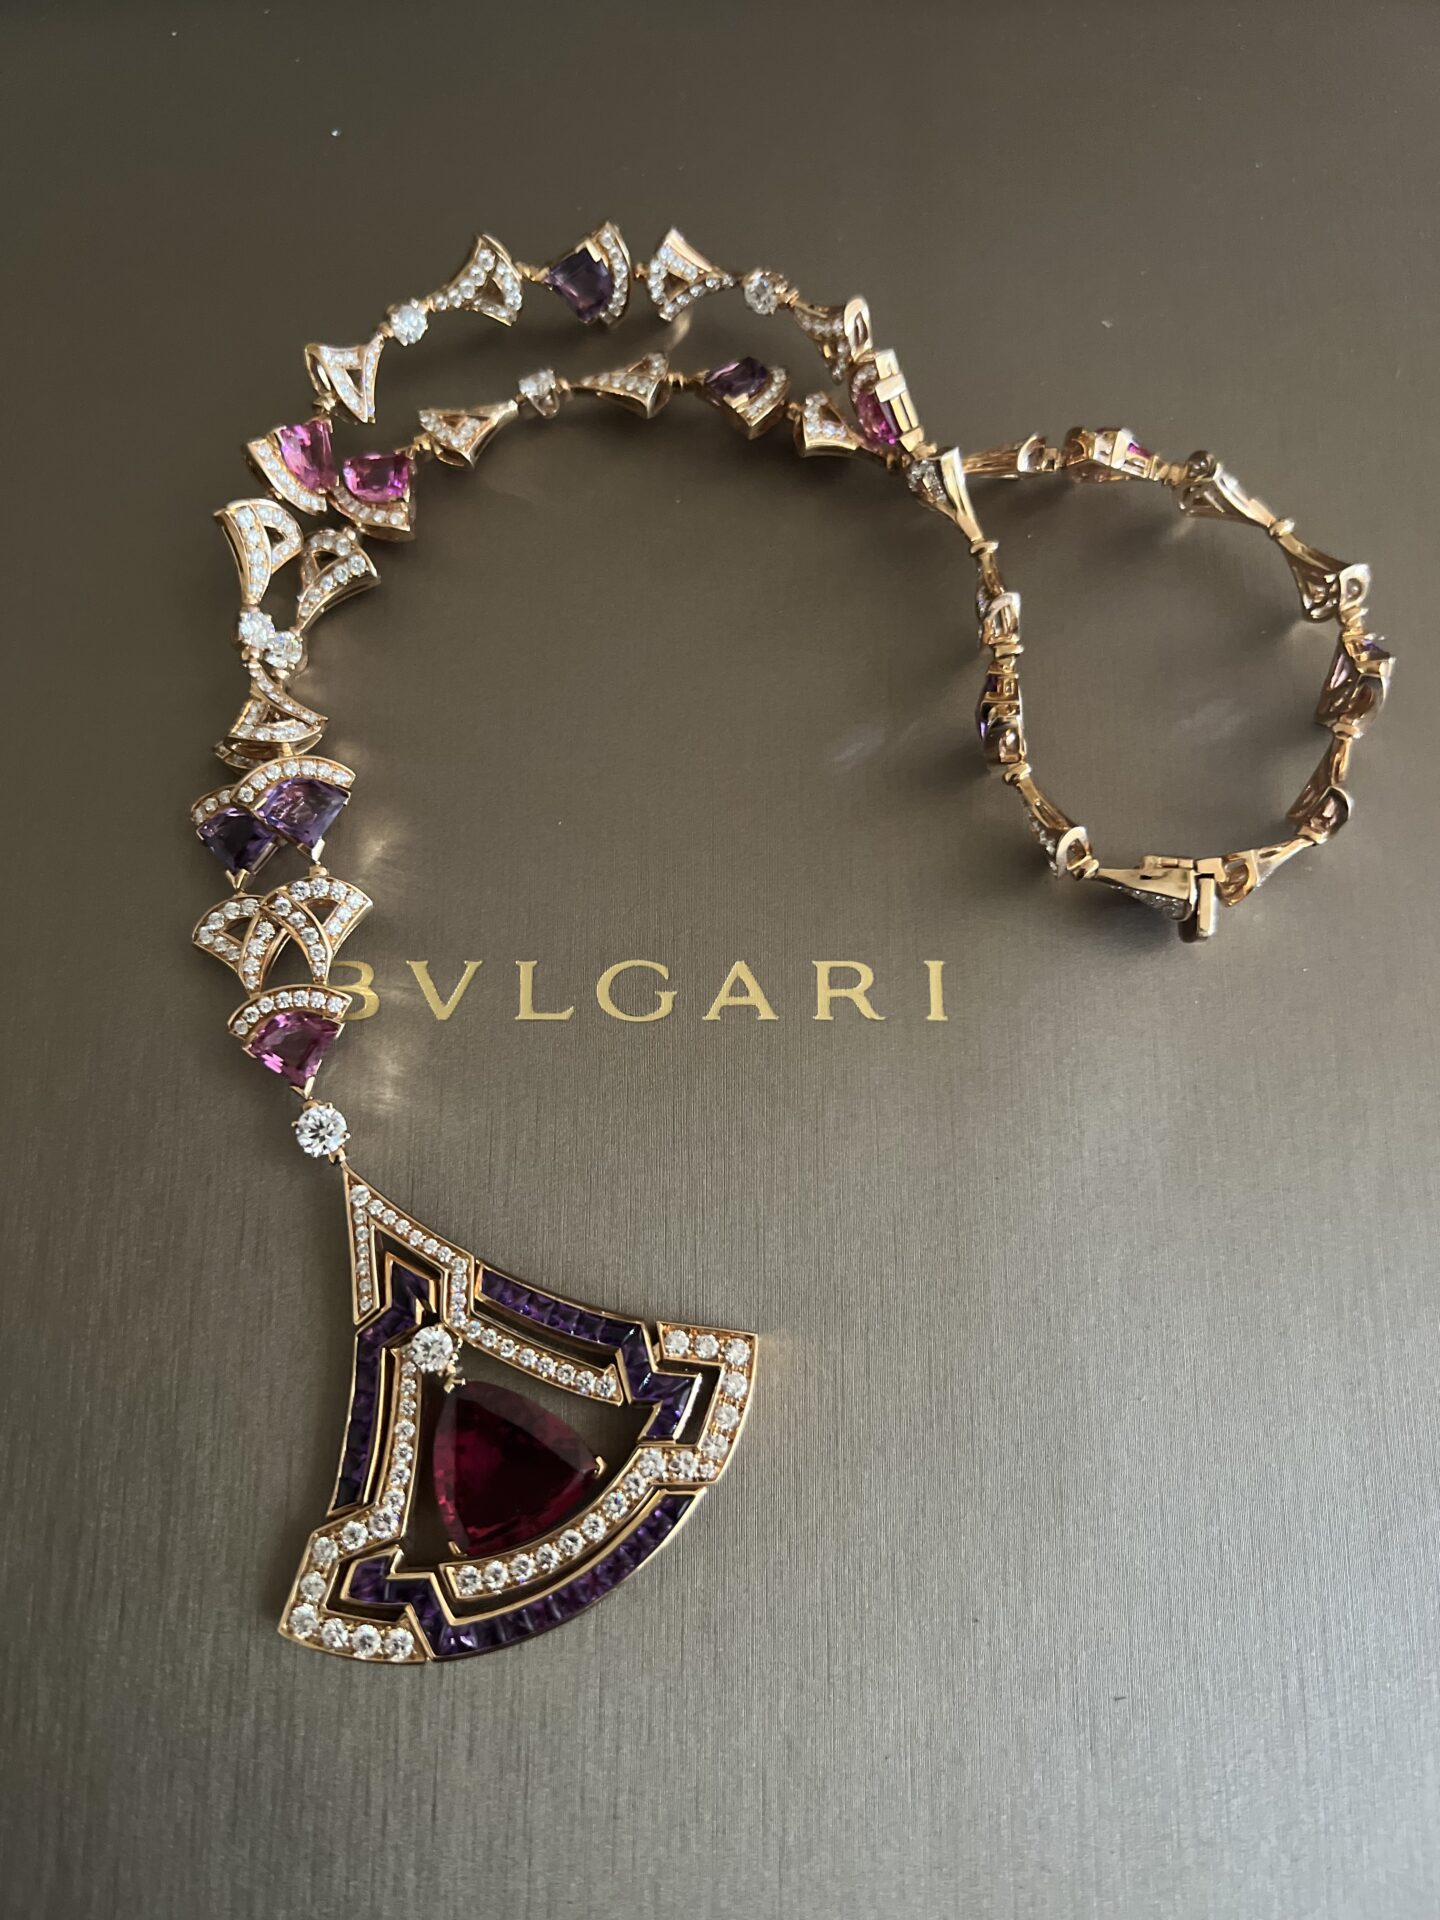 BVLGARI Necklace 18K gold/ diamond/ rubellite/pink tourmaline/ amethyst